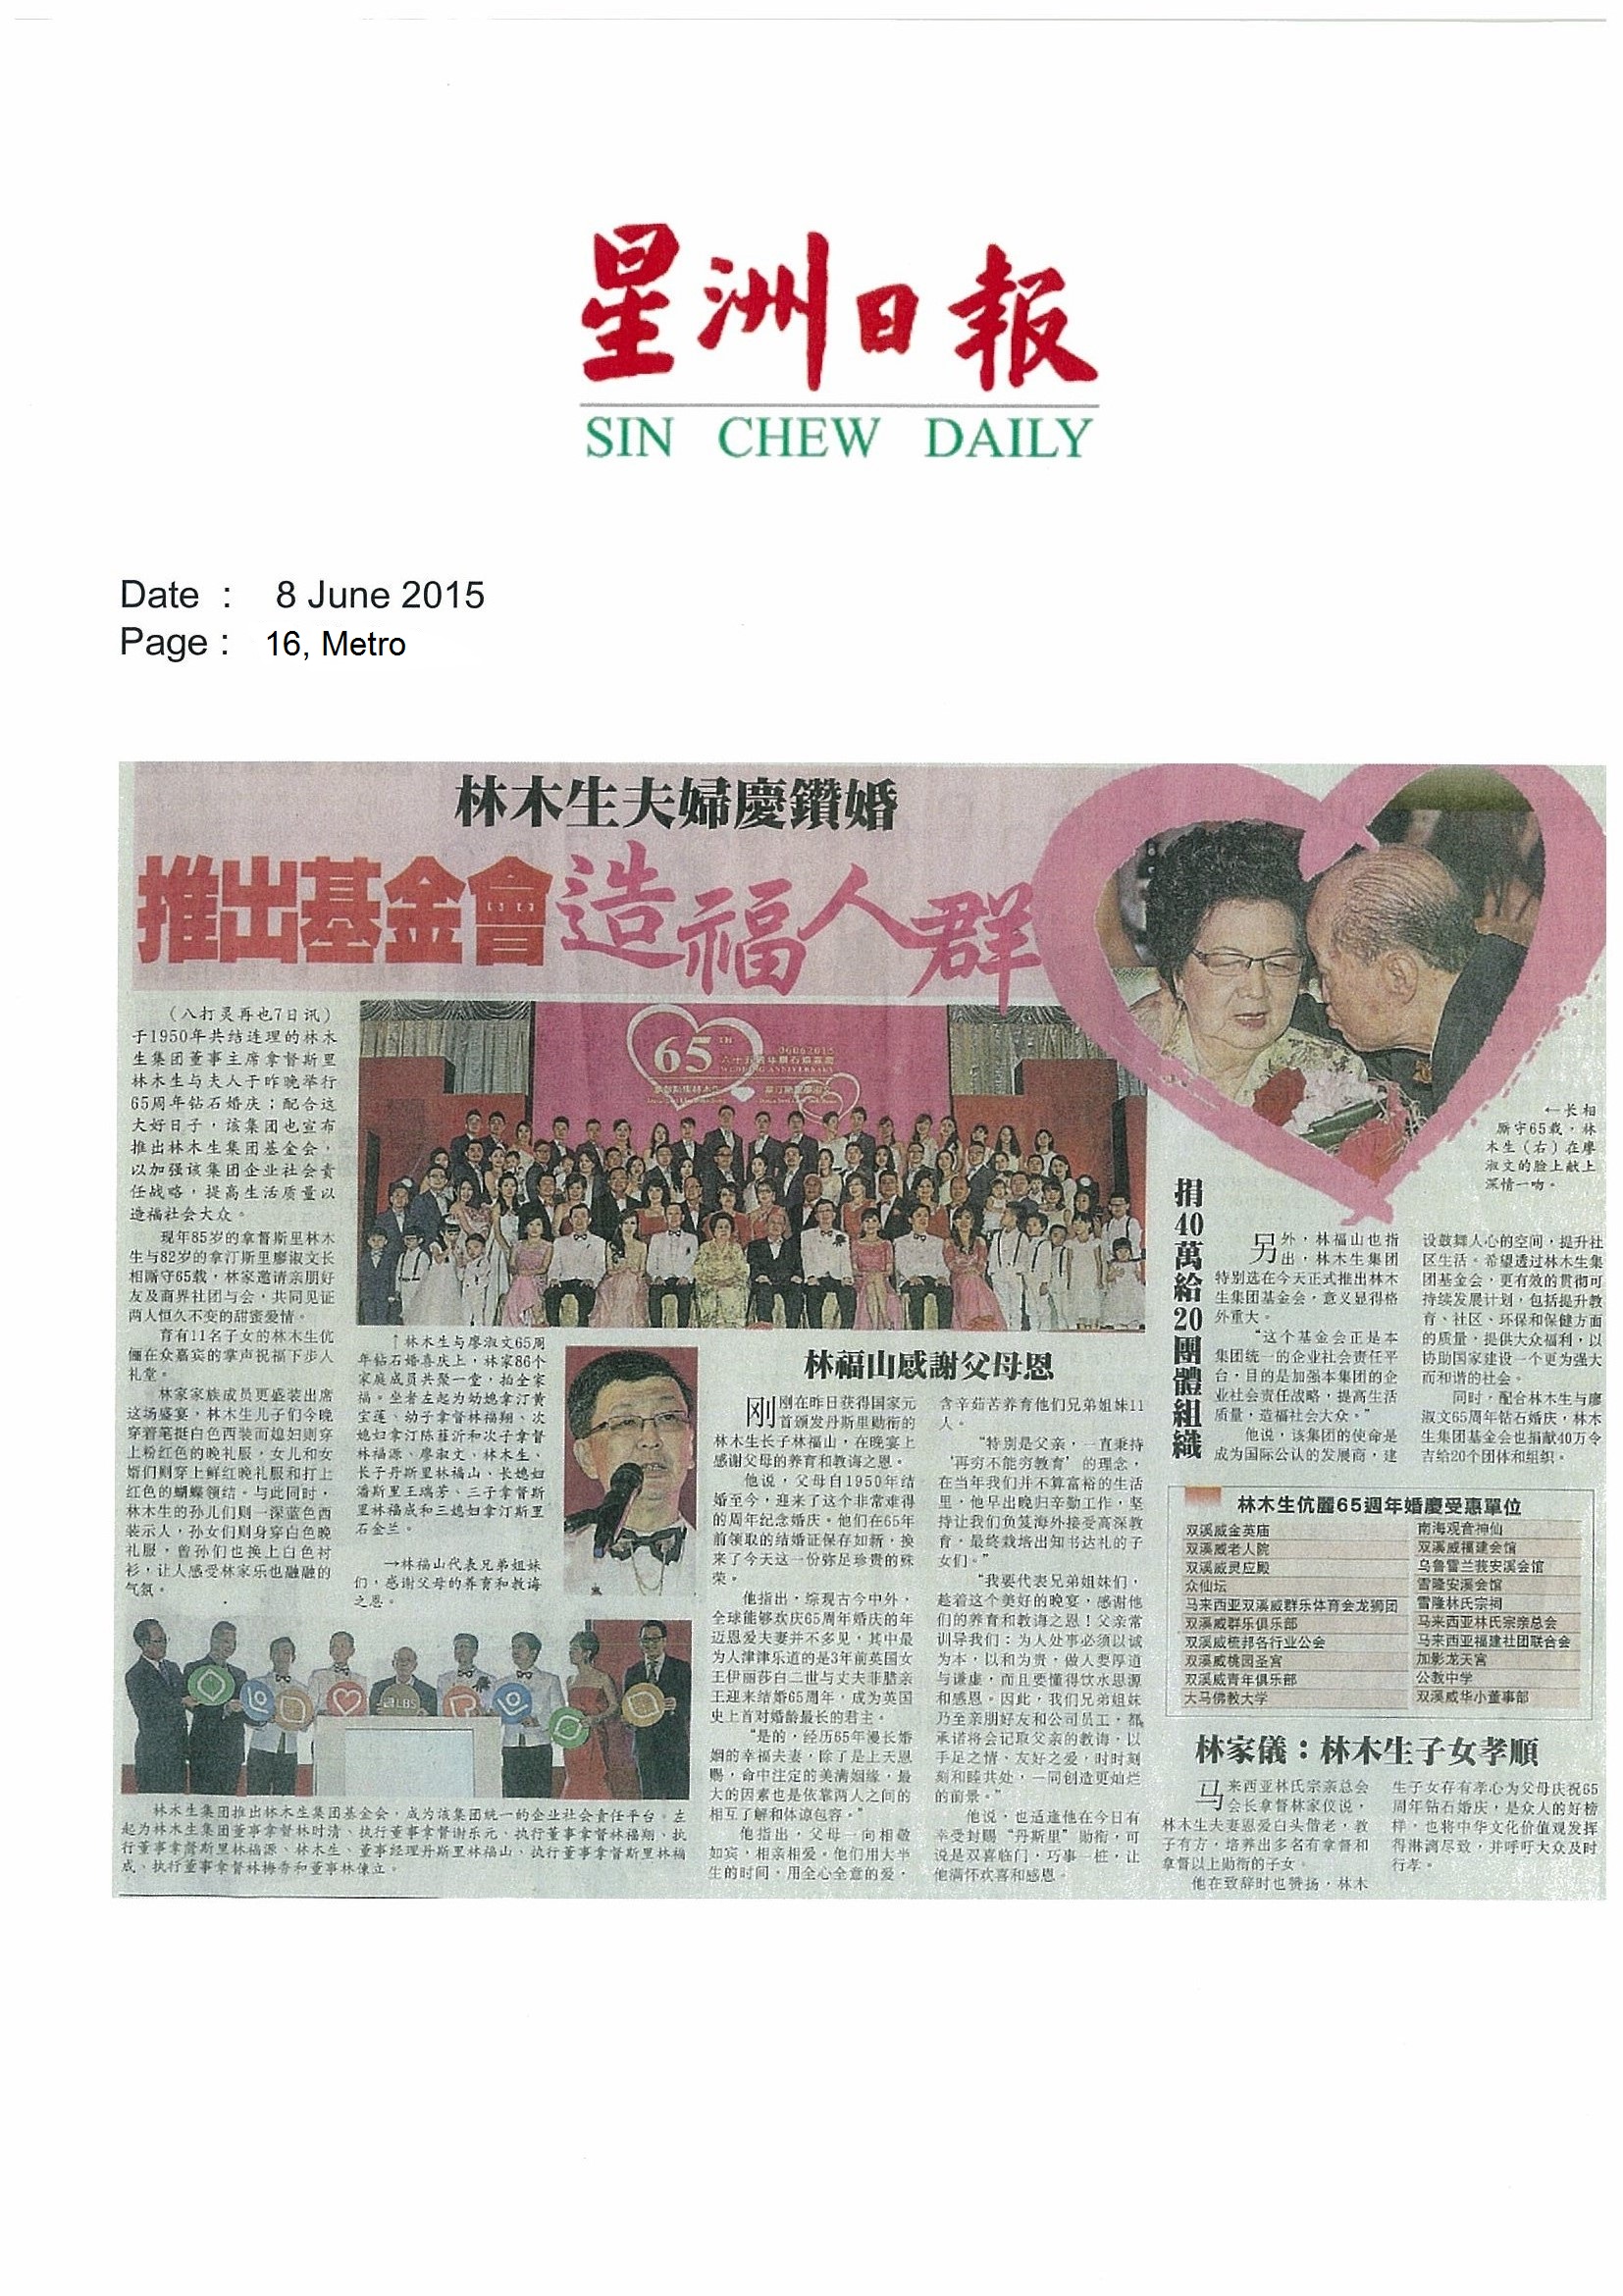 2015.06.08 Sin Chew- LBS Foundation during 65th wedding anniversary